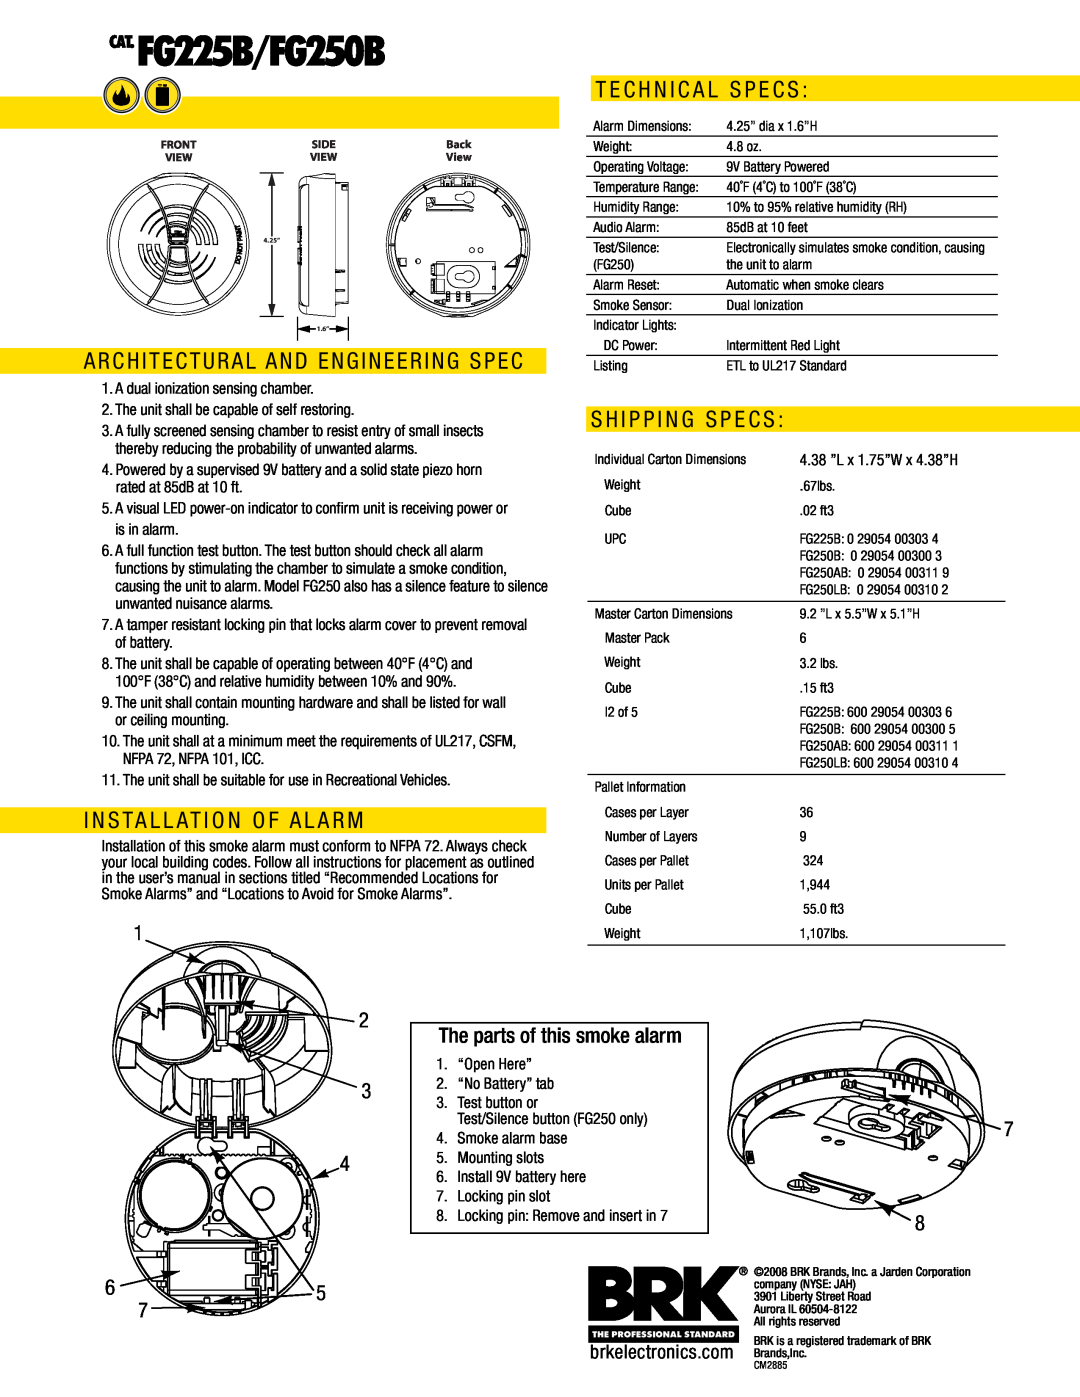 BRK electronic manual The parts of this smoke alarm, brkelectronics.com Brands,Inc, CAT. FG225B/FG250B 